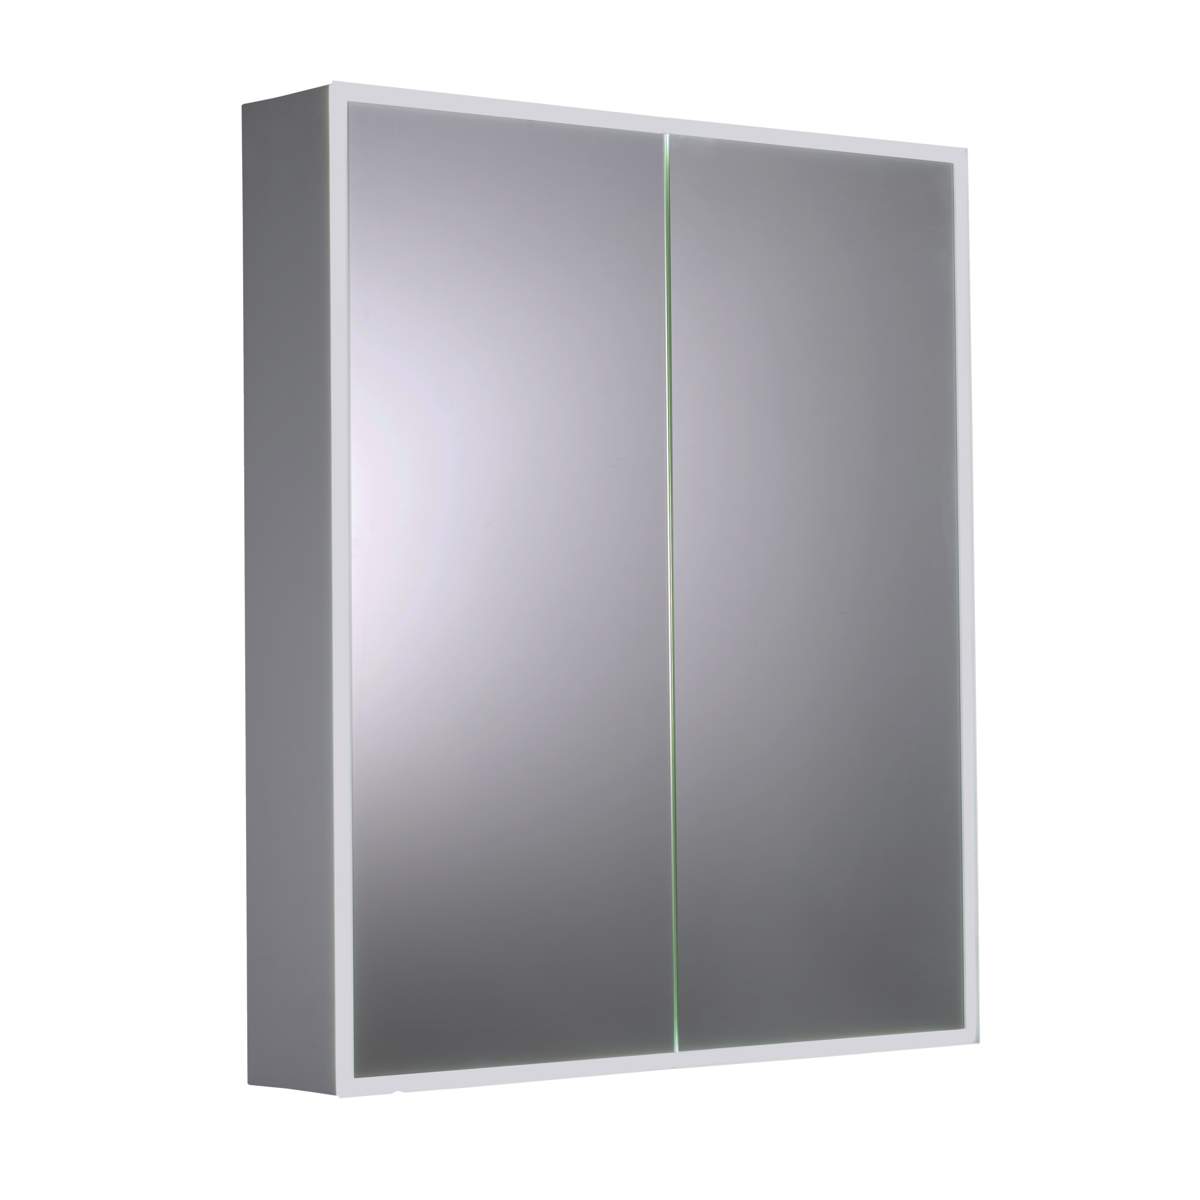 JTP Aspect Mirror Cabinet 600mm (ASP600)